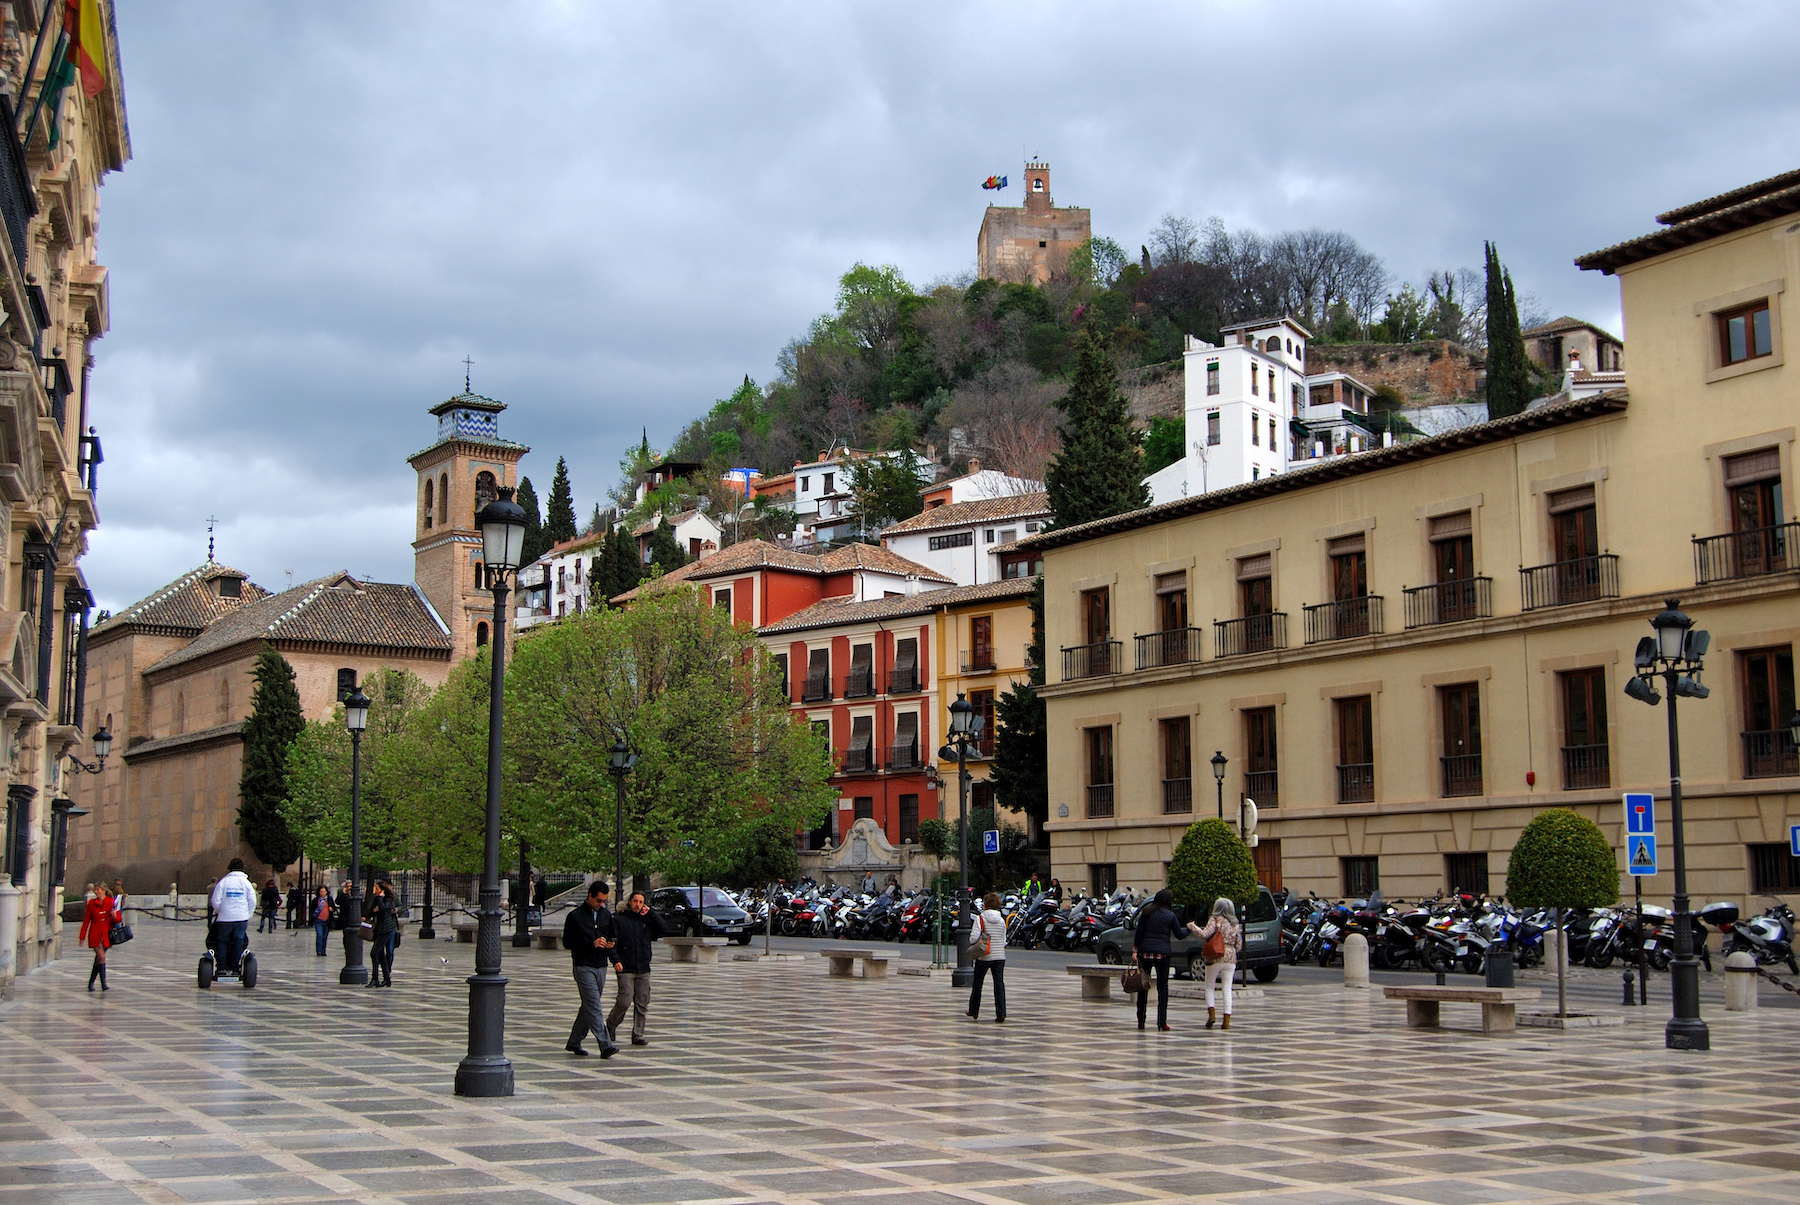 Cómo pasar un fin de semana perfecto en hermosa Granada, España - 9